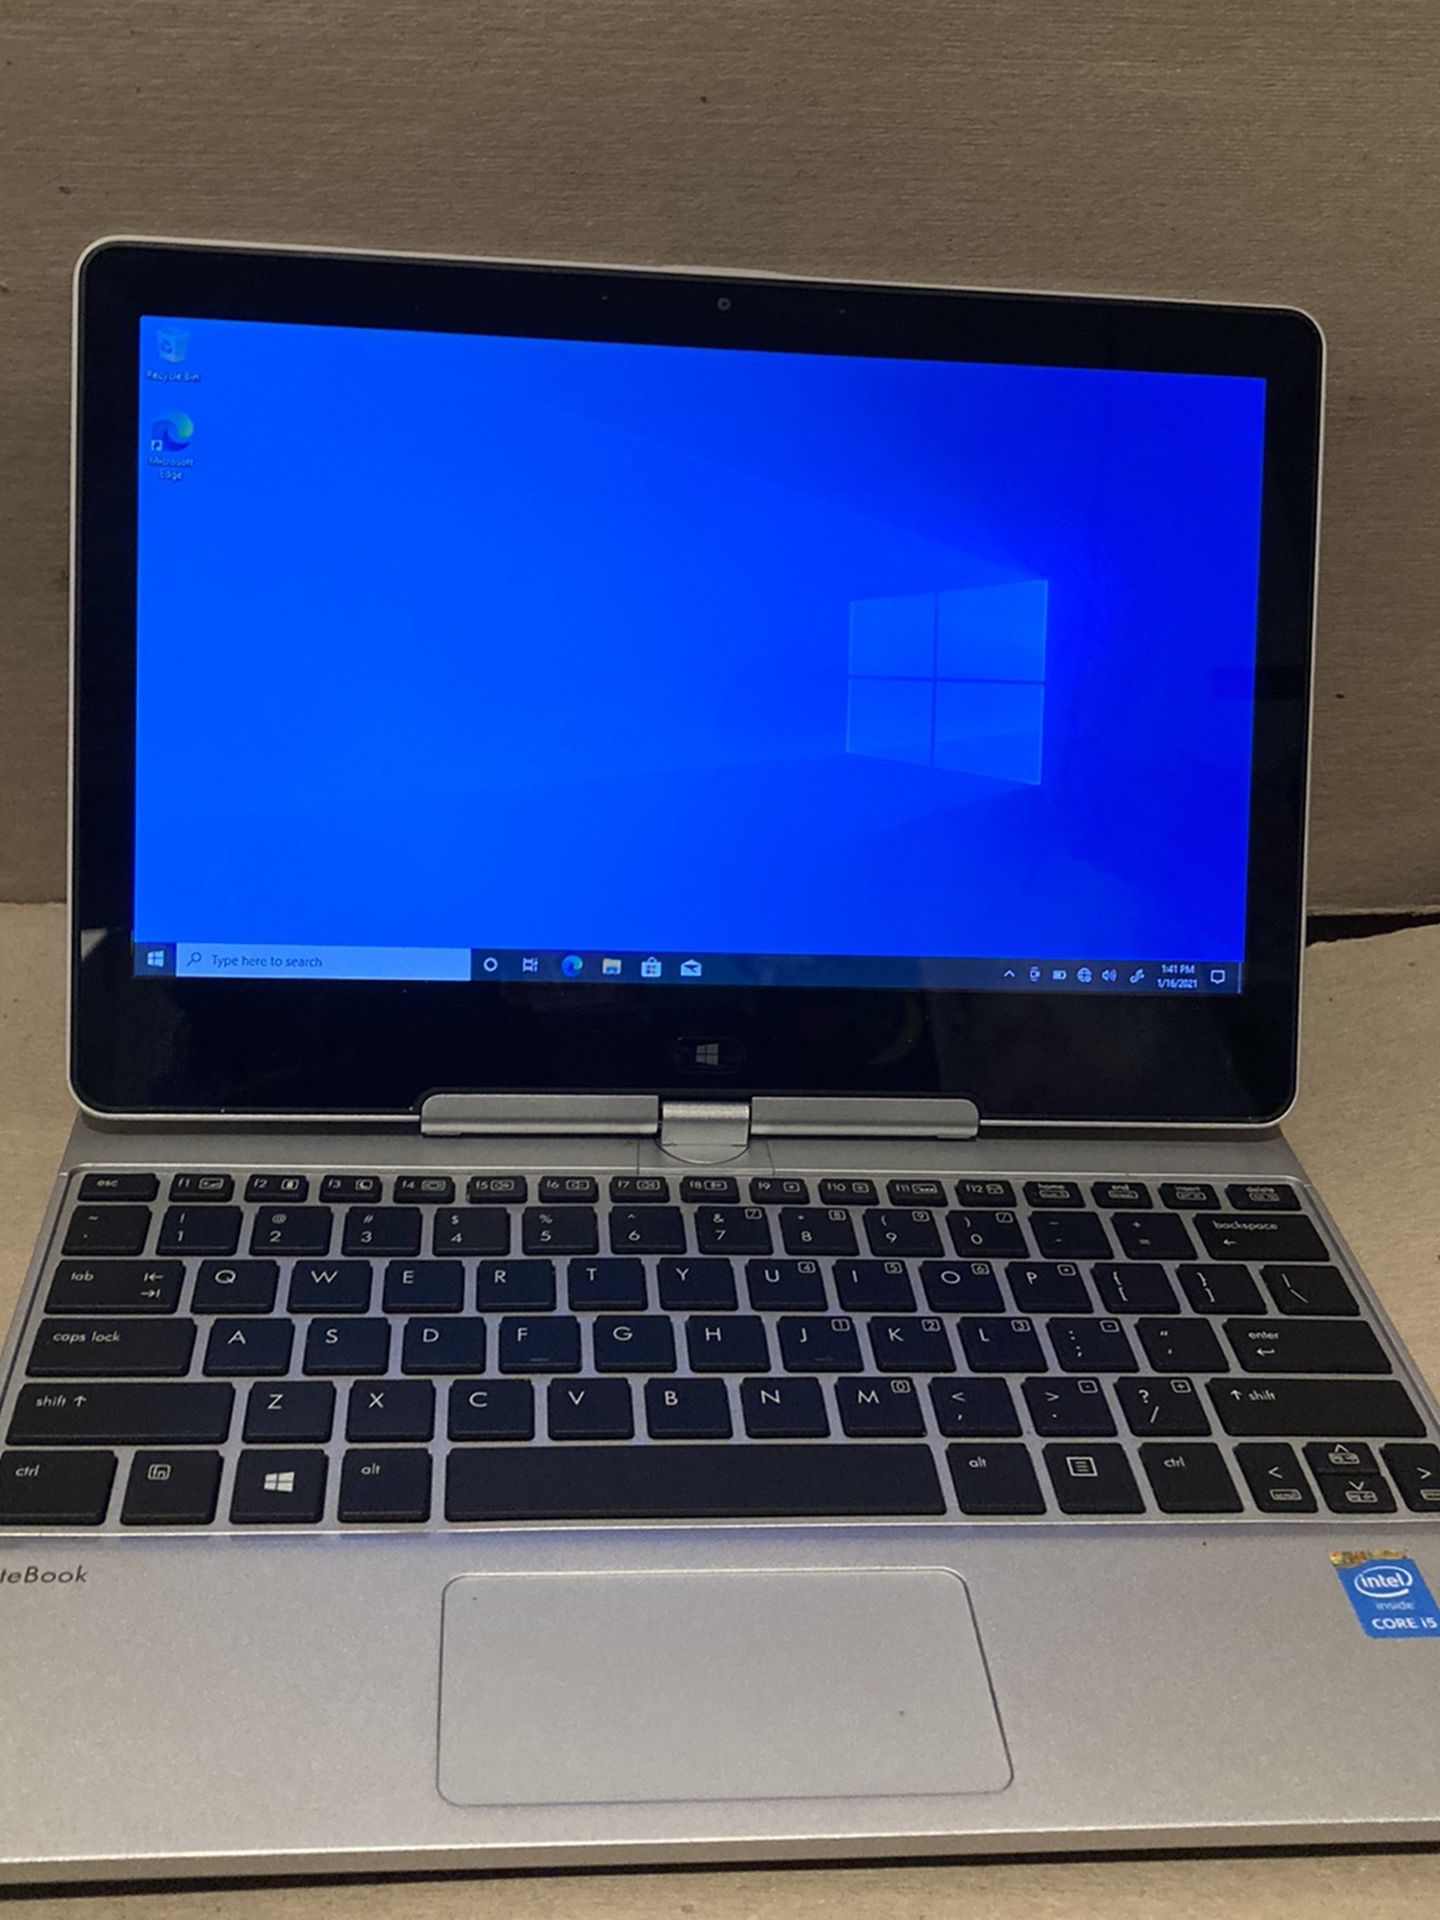 HP EliteBook Revolve 810 G2 (2014) 2-in-1 Laptop PC